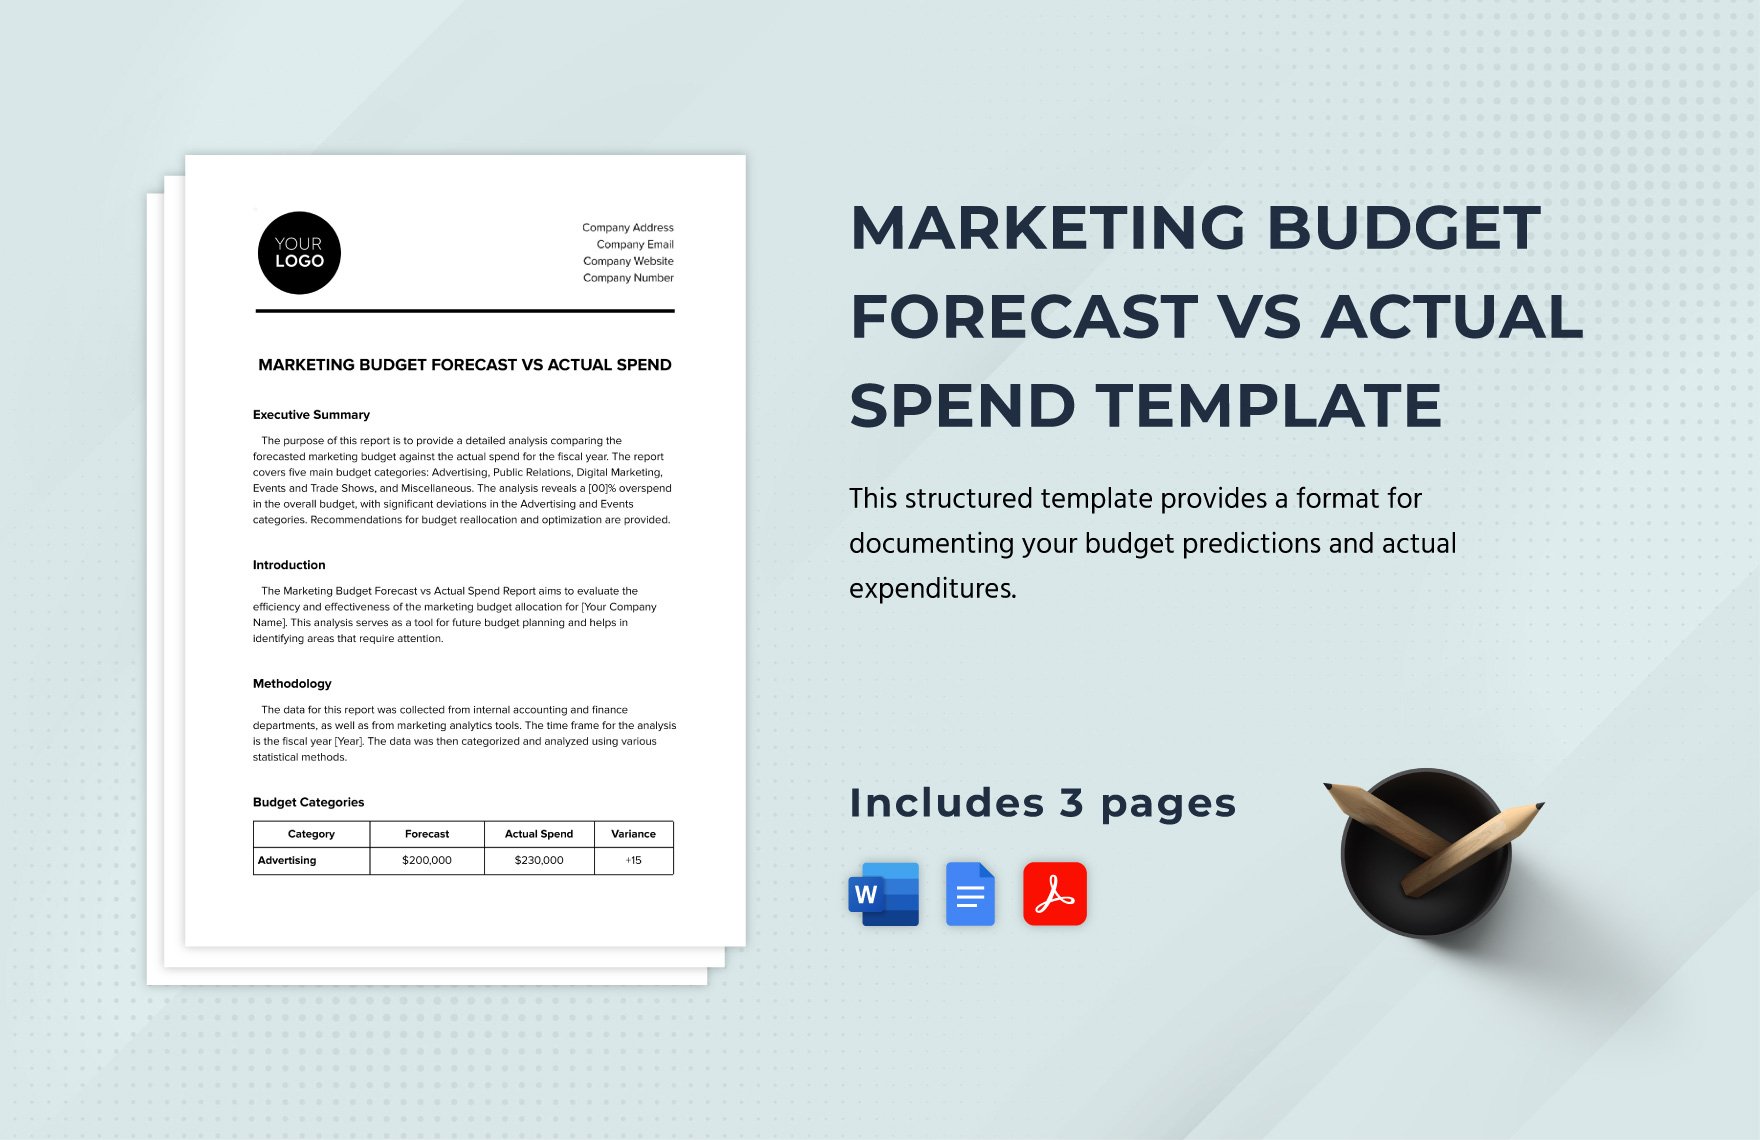 Marketing Budget Forecast vs Actual Spend Template